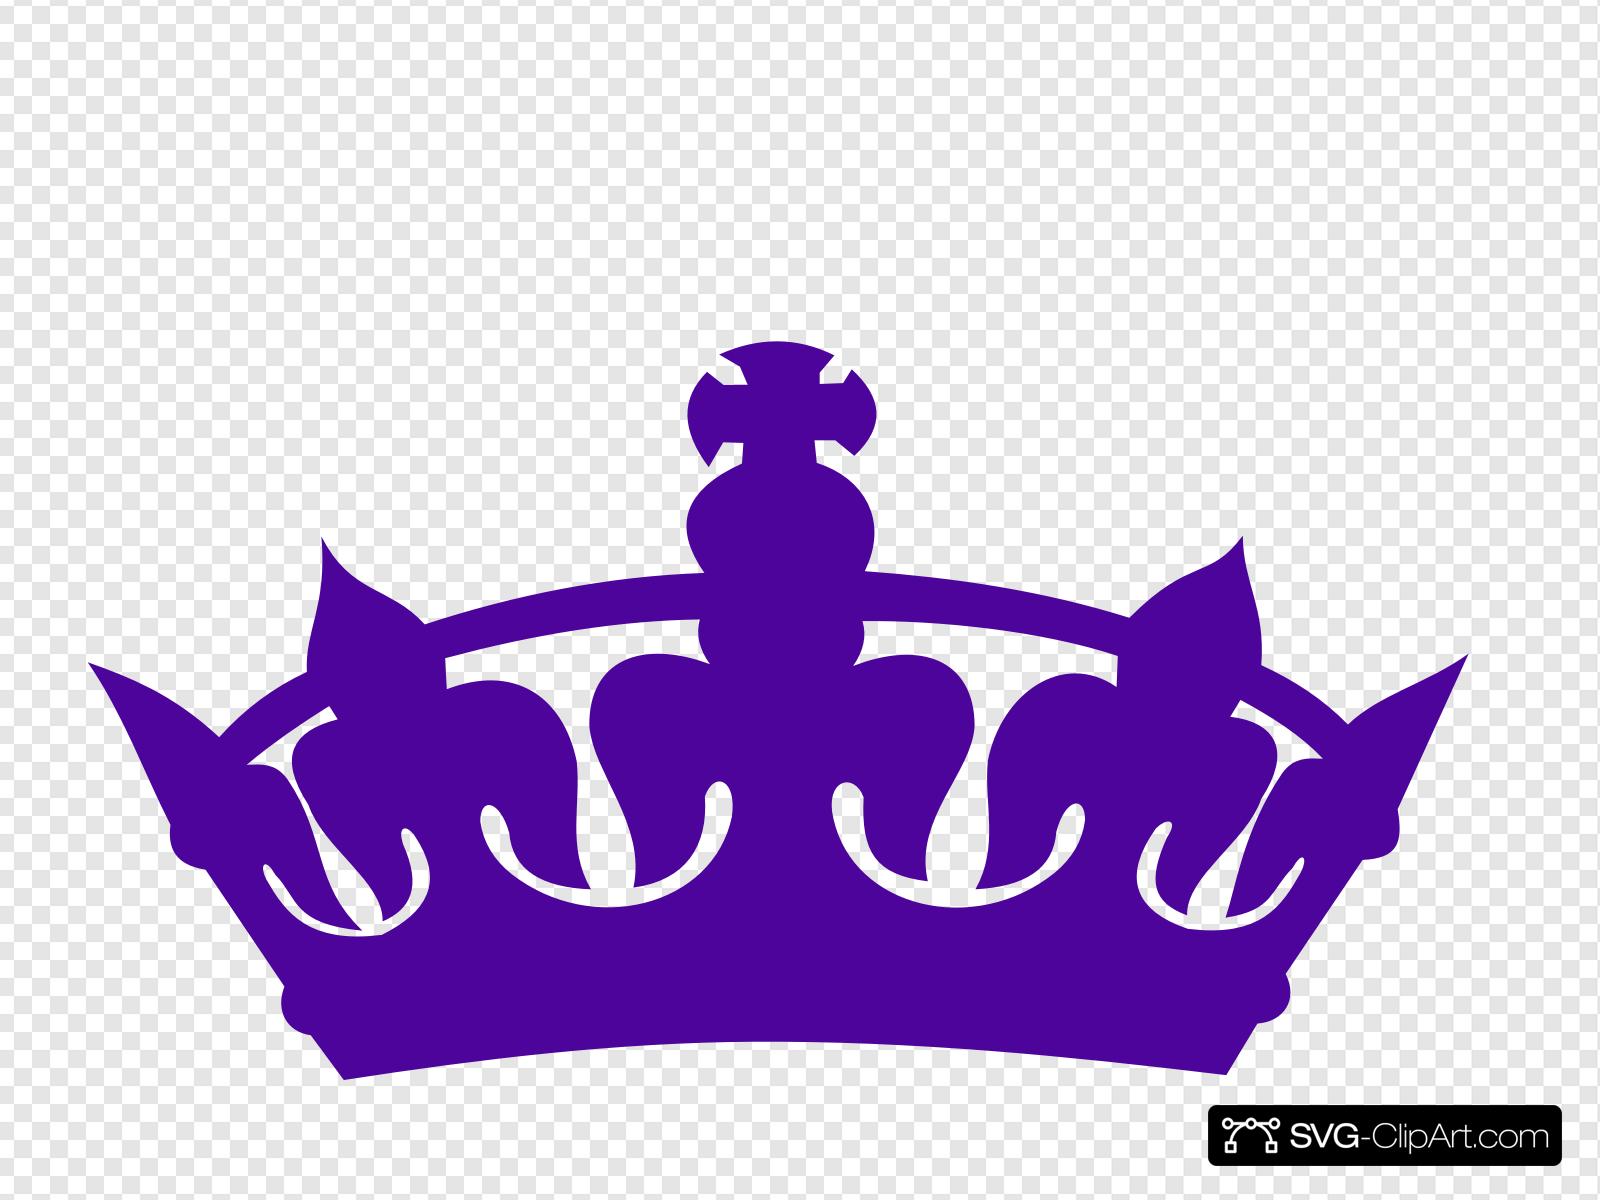 Purple Crown Clip art, Icon and SVG